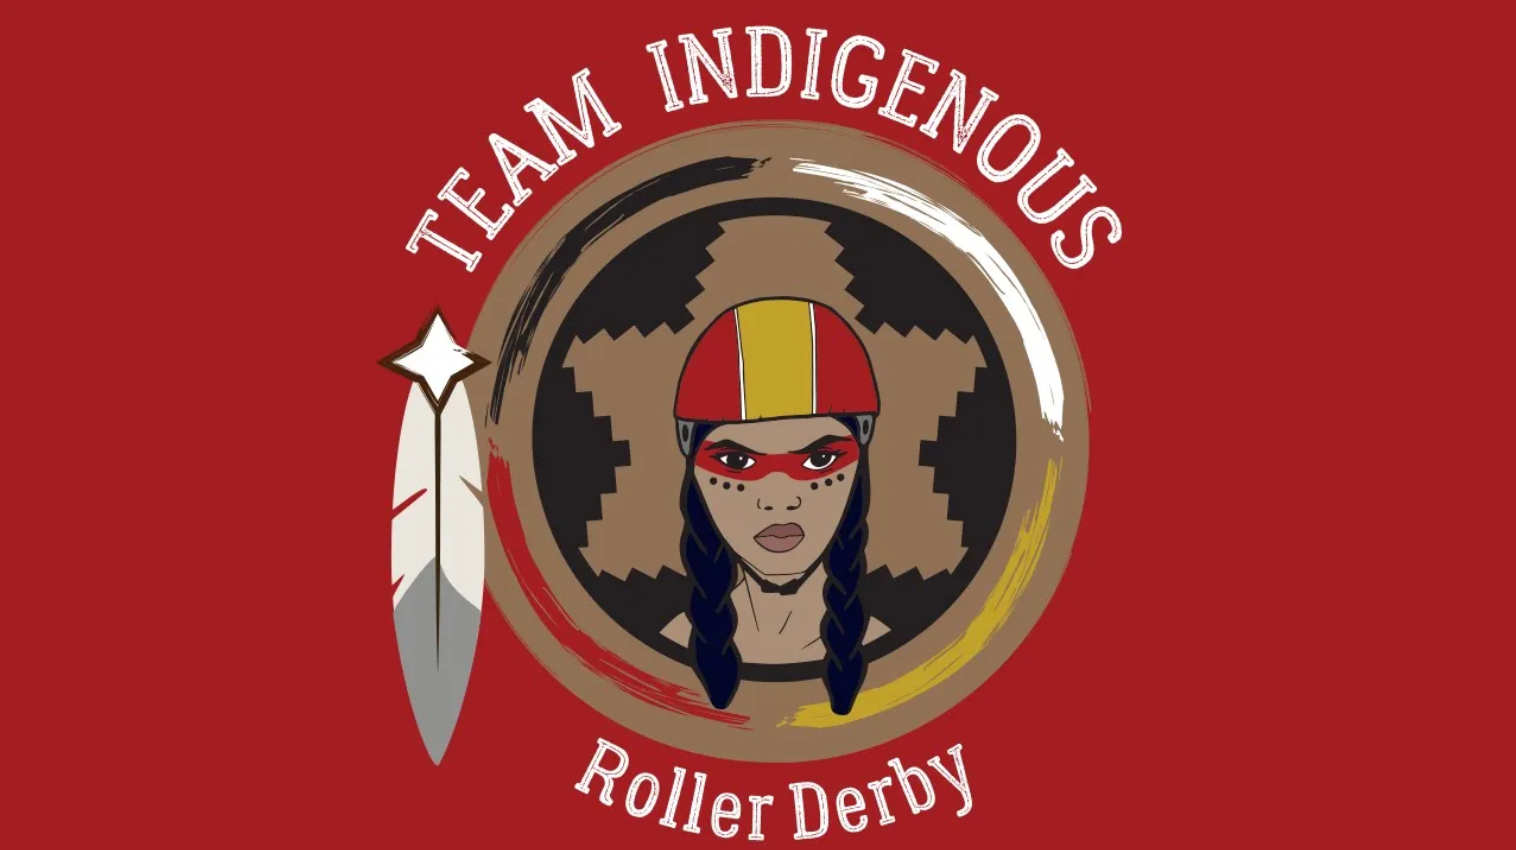 Team Indigenous 2019 Sports Desk Interview